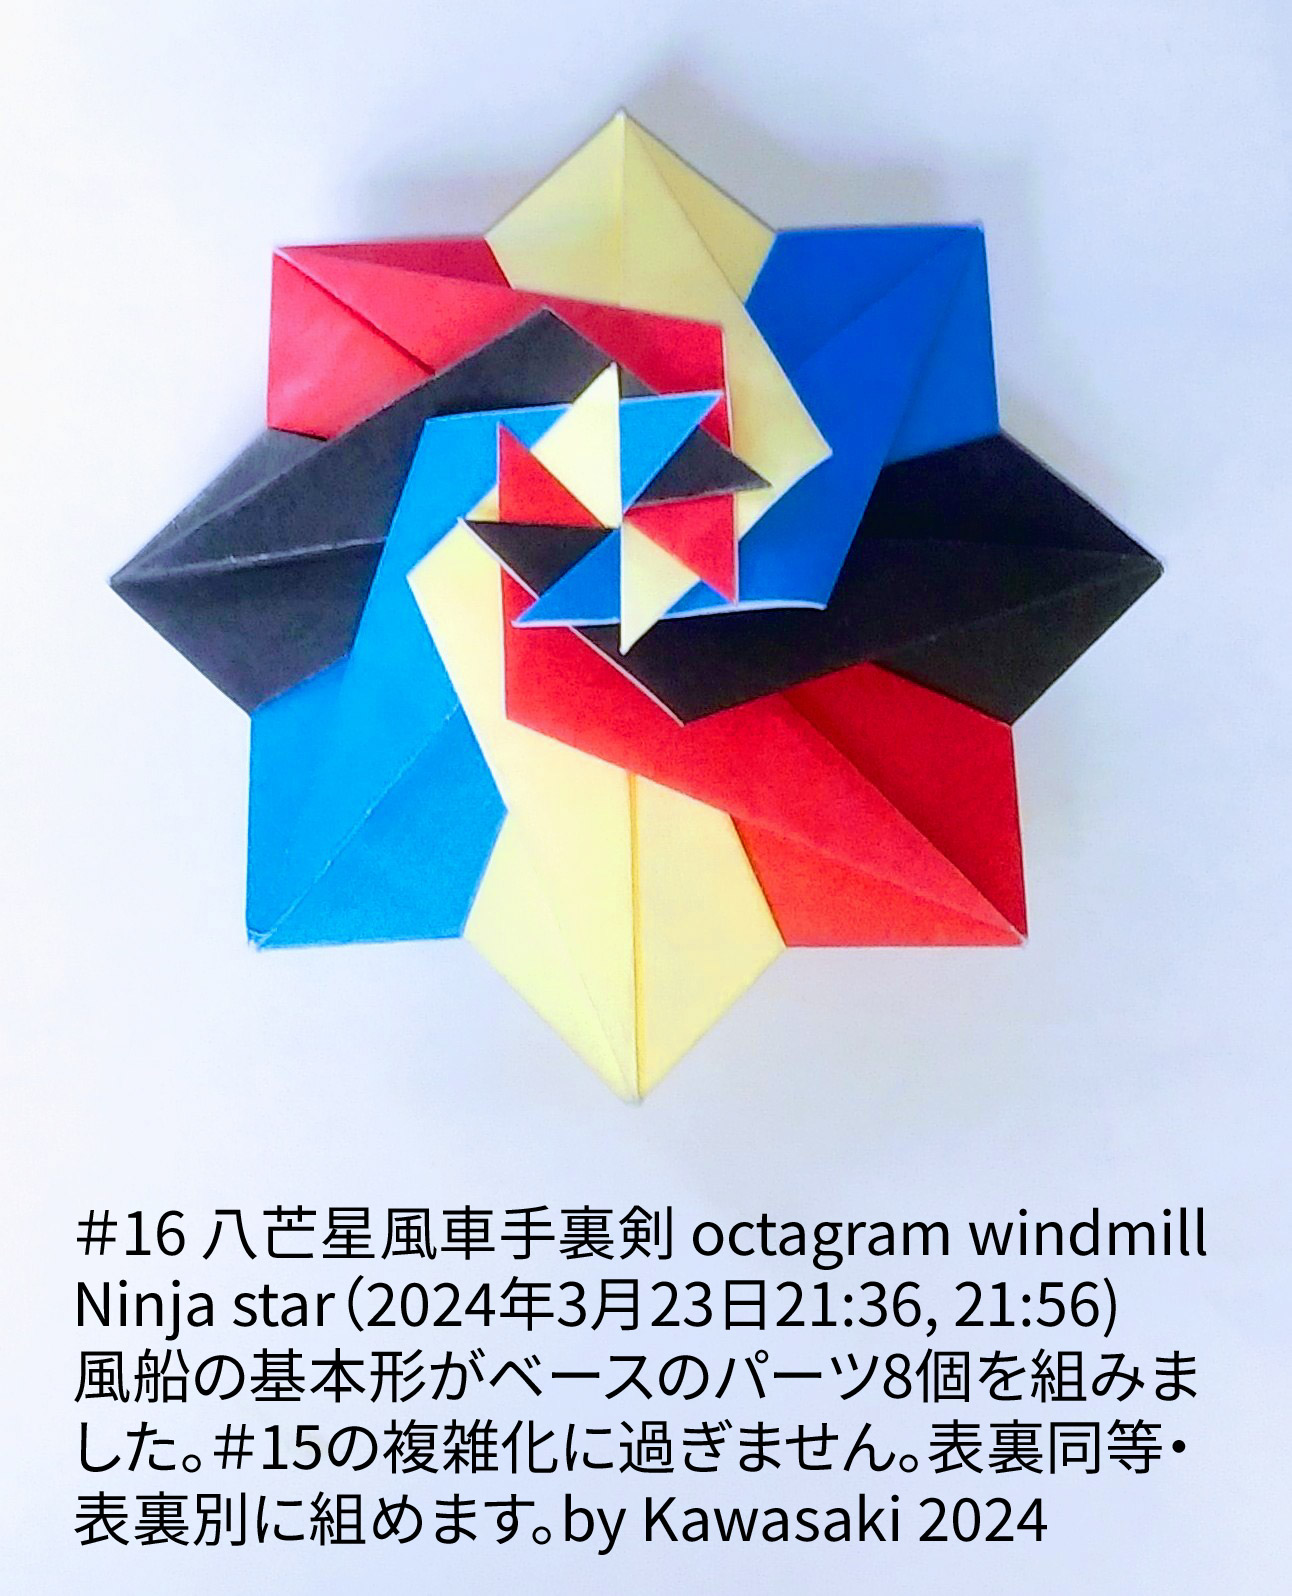 2024/03/24(Sun) 10:46「＃16 八芒星風車手裏剣 octagram windmill Ninja star（2024年3月23日21:36, 21:56)」川崎敏和 T.Kawasaki
（創作者 Author：川崎敏和 T.Kawasaki,　製作者 Folder：川崎敏和 T.Kawasaki ,　出典 Source：2024年川崎敏和折り紙キット＃16）
 風船の基本形がベースのパーツ8個を組みました。＃15の複雑化に過ぎません。表裏同等・表裏別に組めます。by Kawasaki 2024